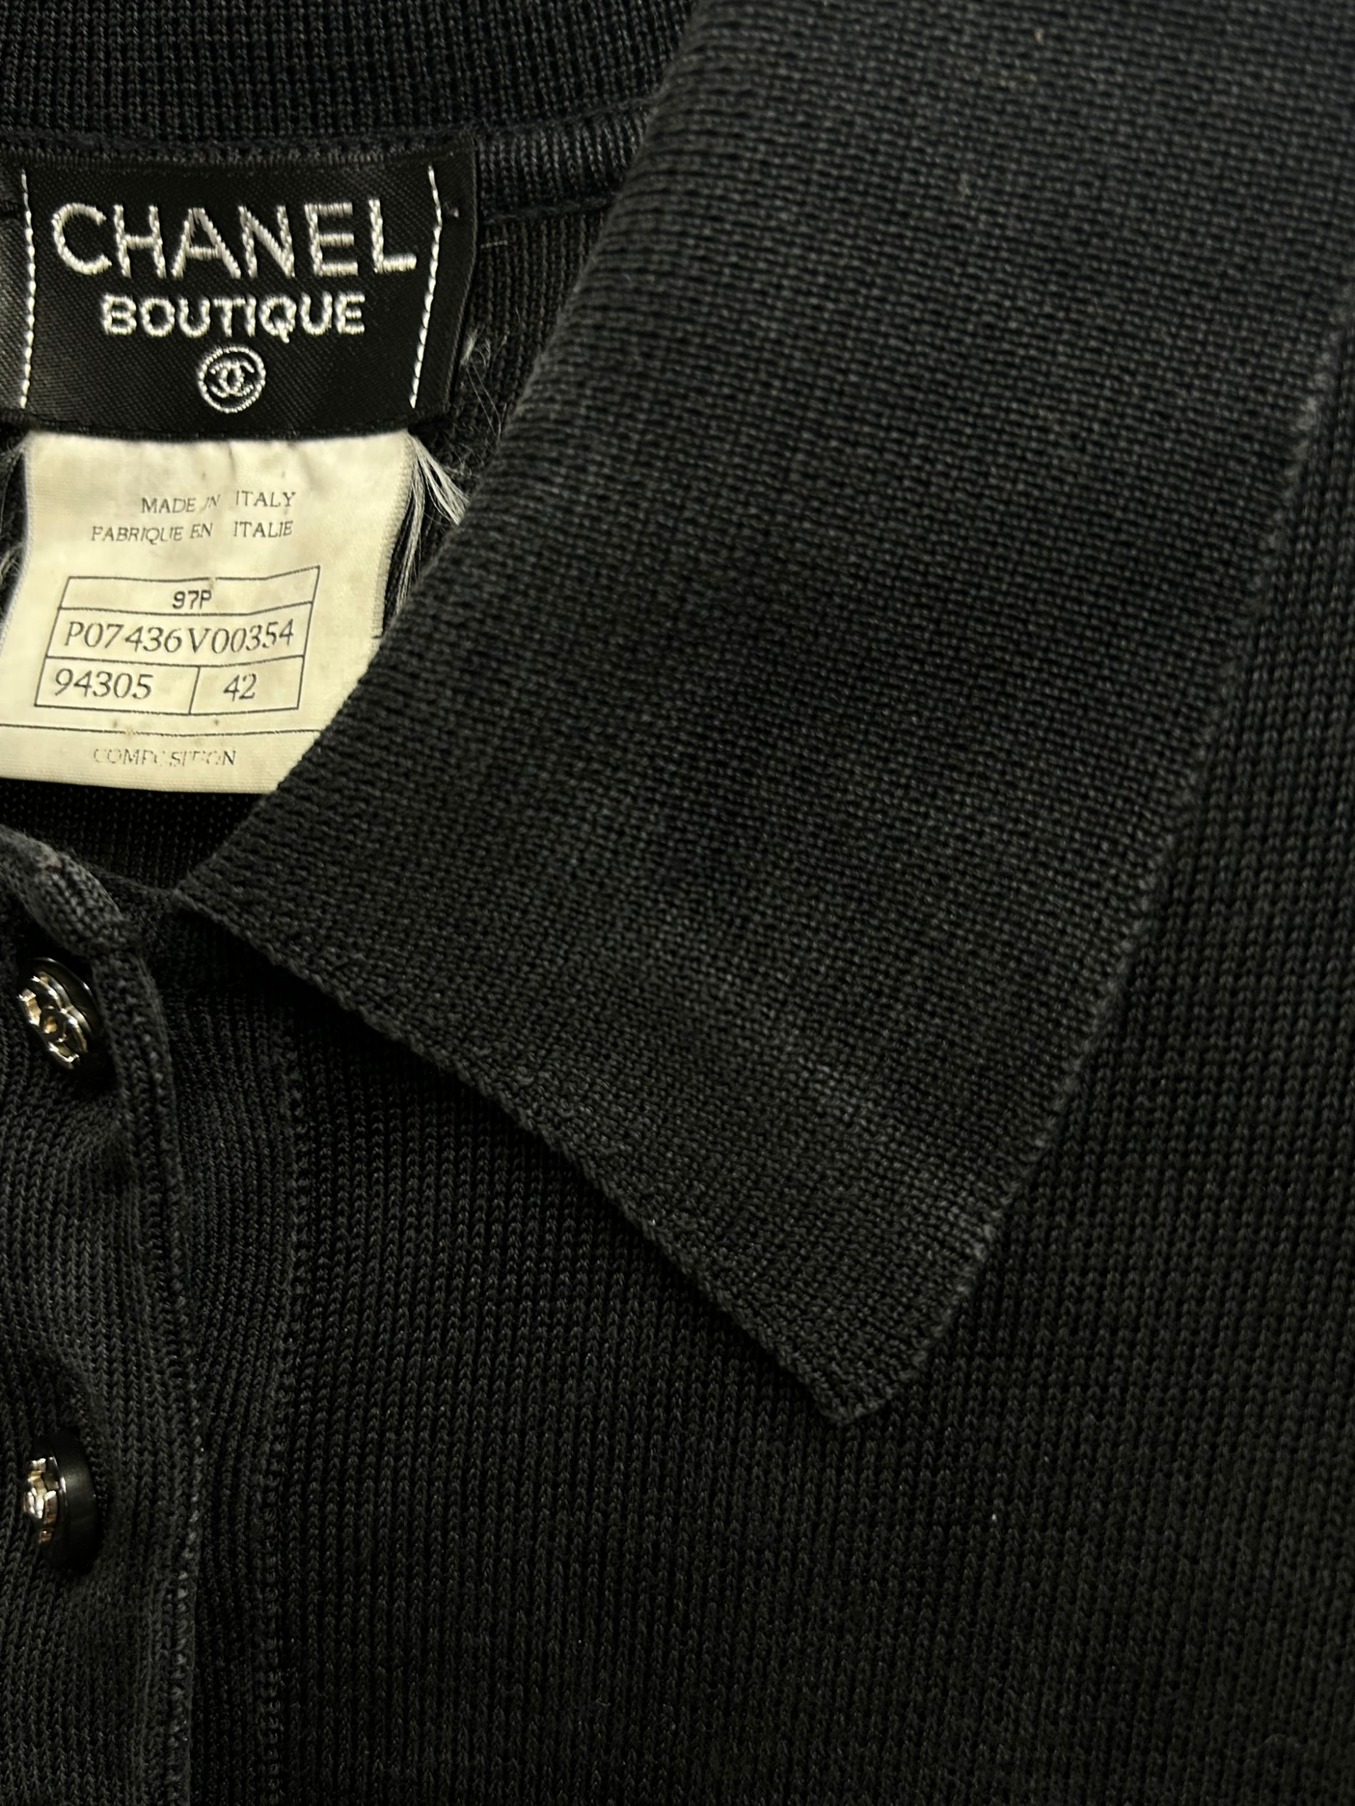 CHANEL (シャネル) シルクニットポロシャツ ブラック サイズ:42